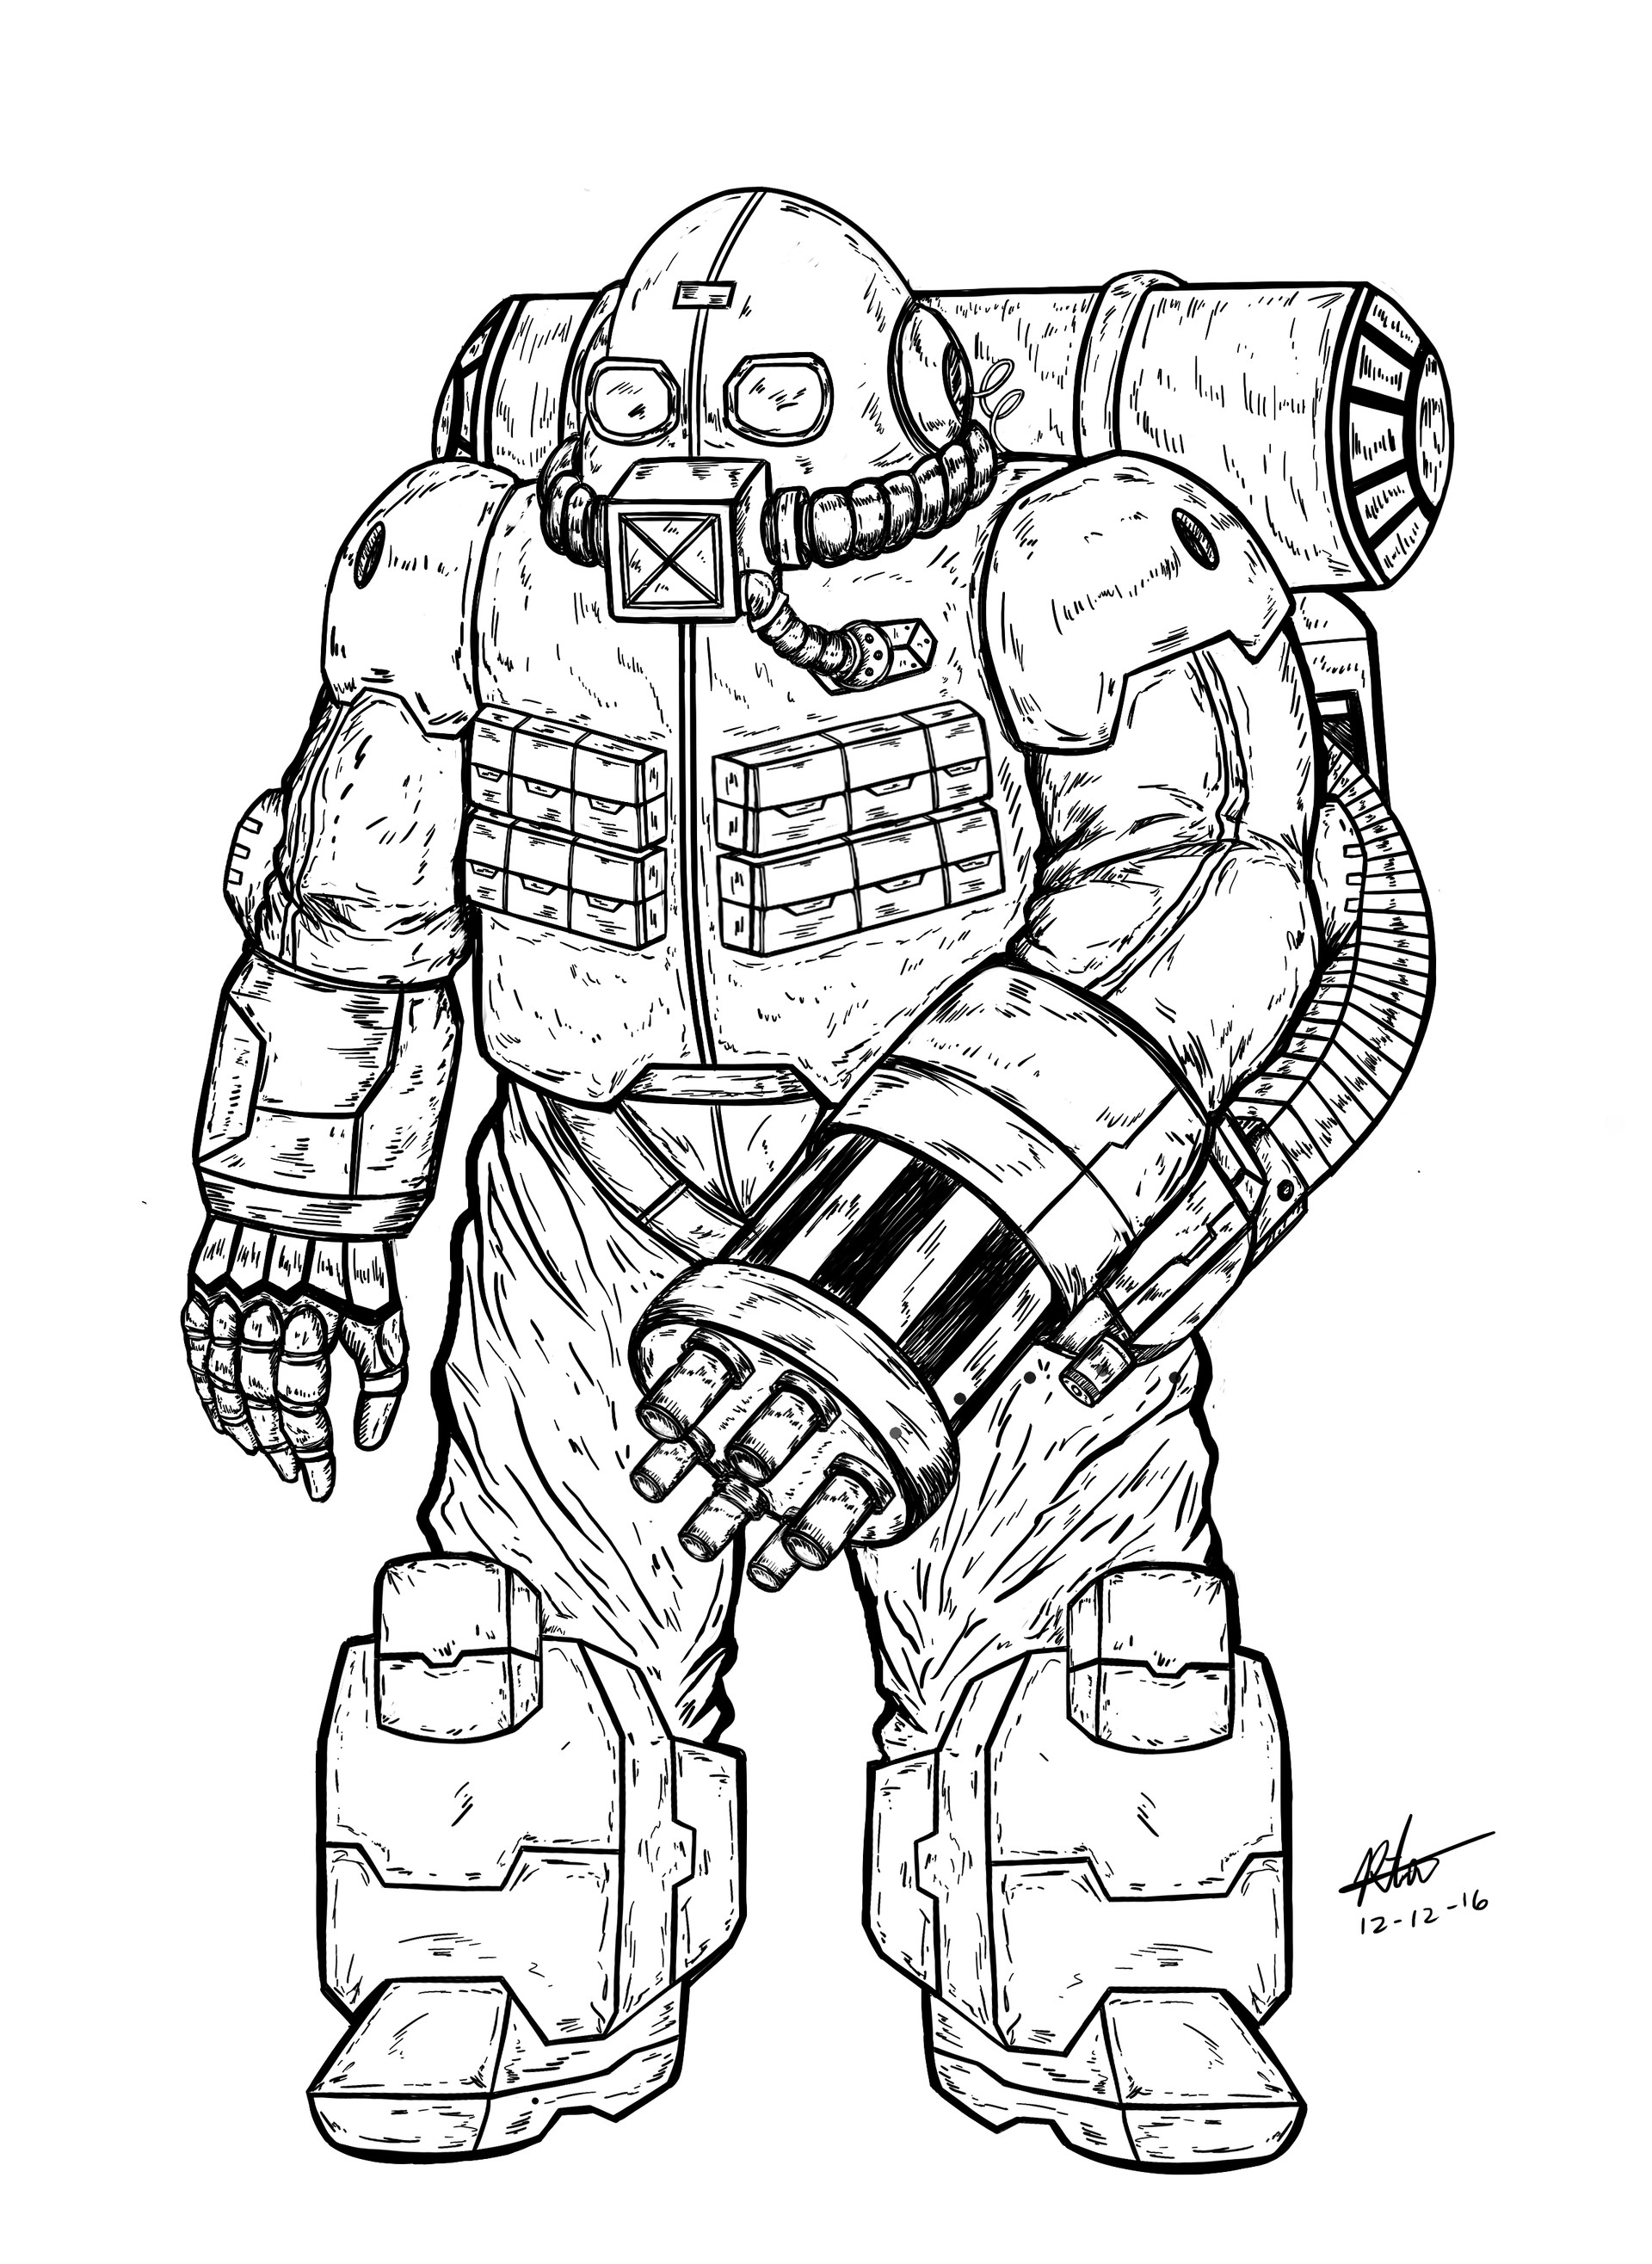 juggernaut suit drawing